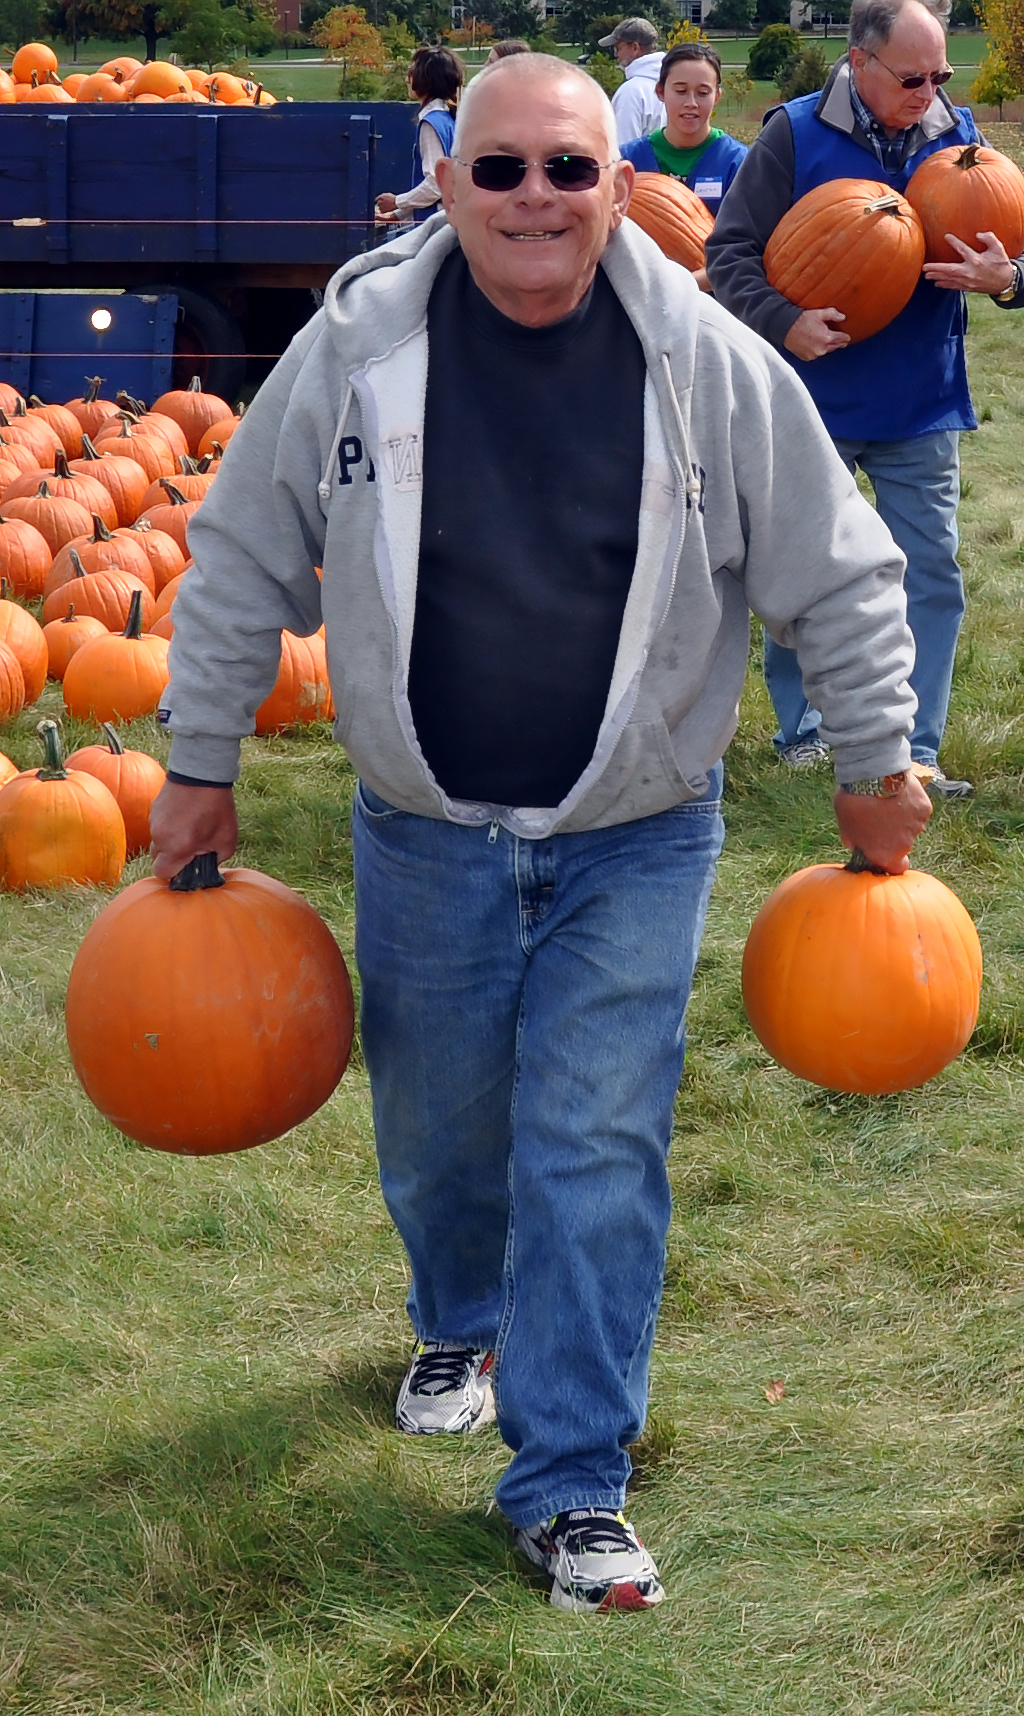 2014 10 05 - Volunteer preparing for Pumpkin Giveaway - kkreeder